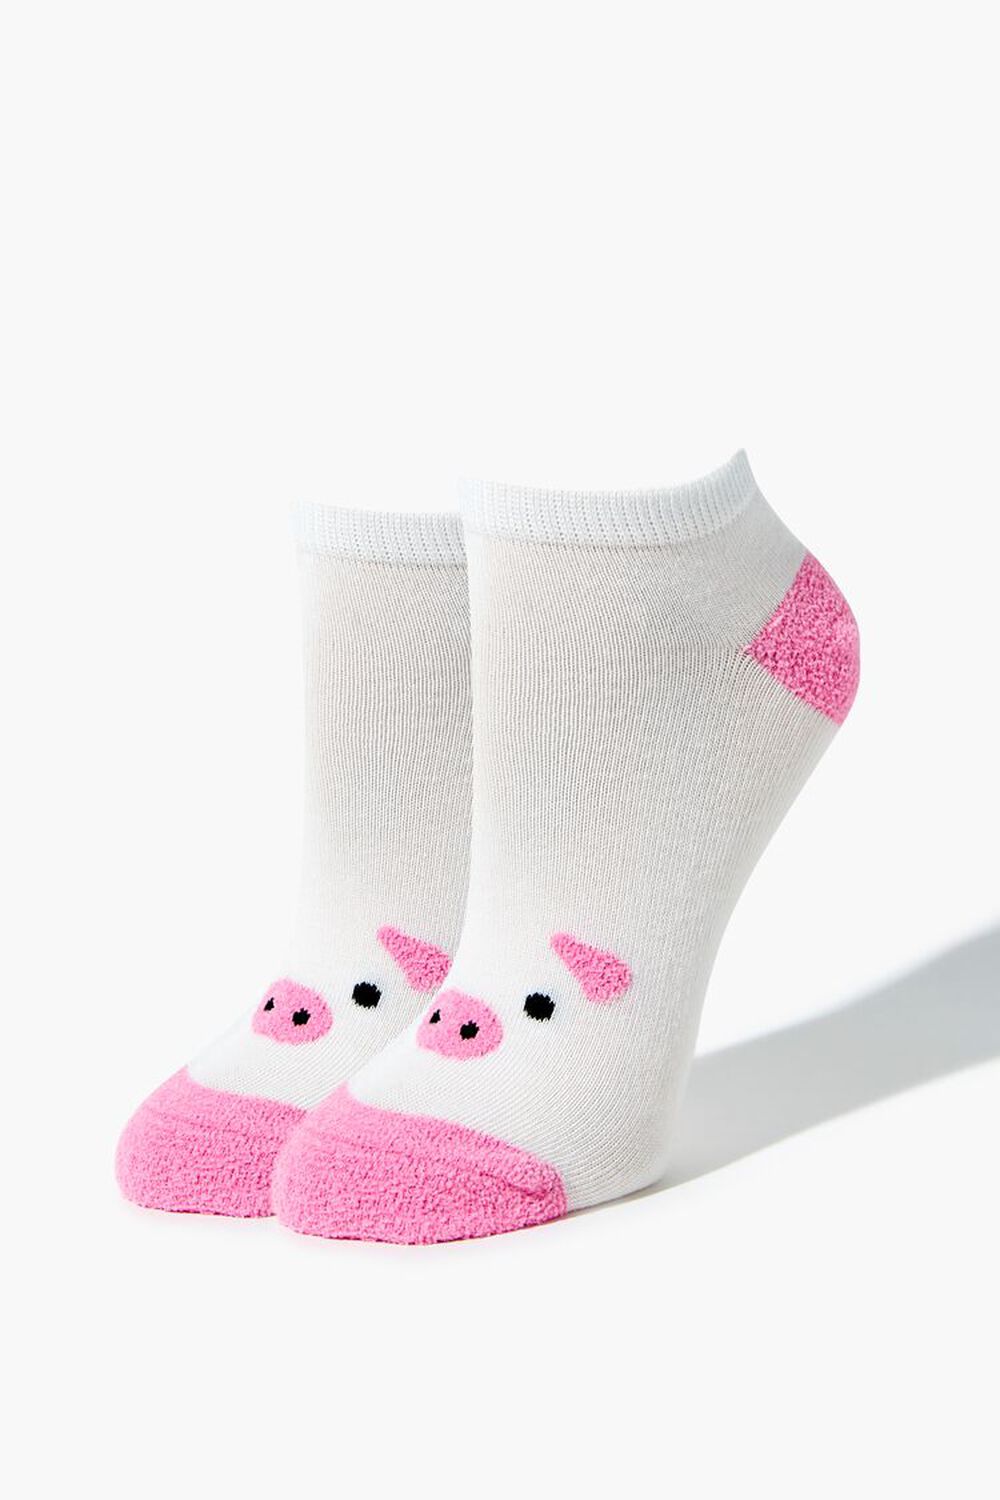 Textured Pig Ankle Socks, image 1